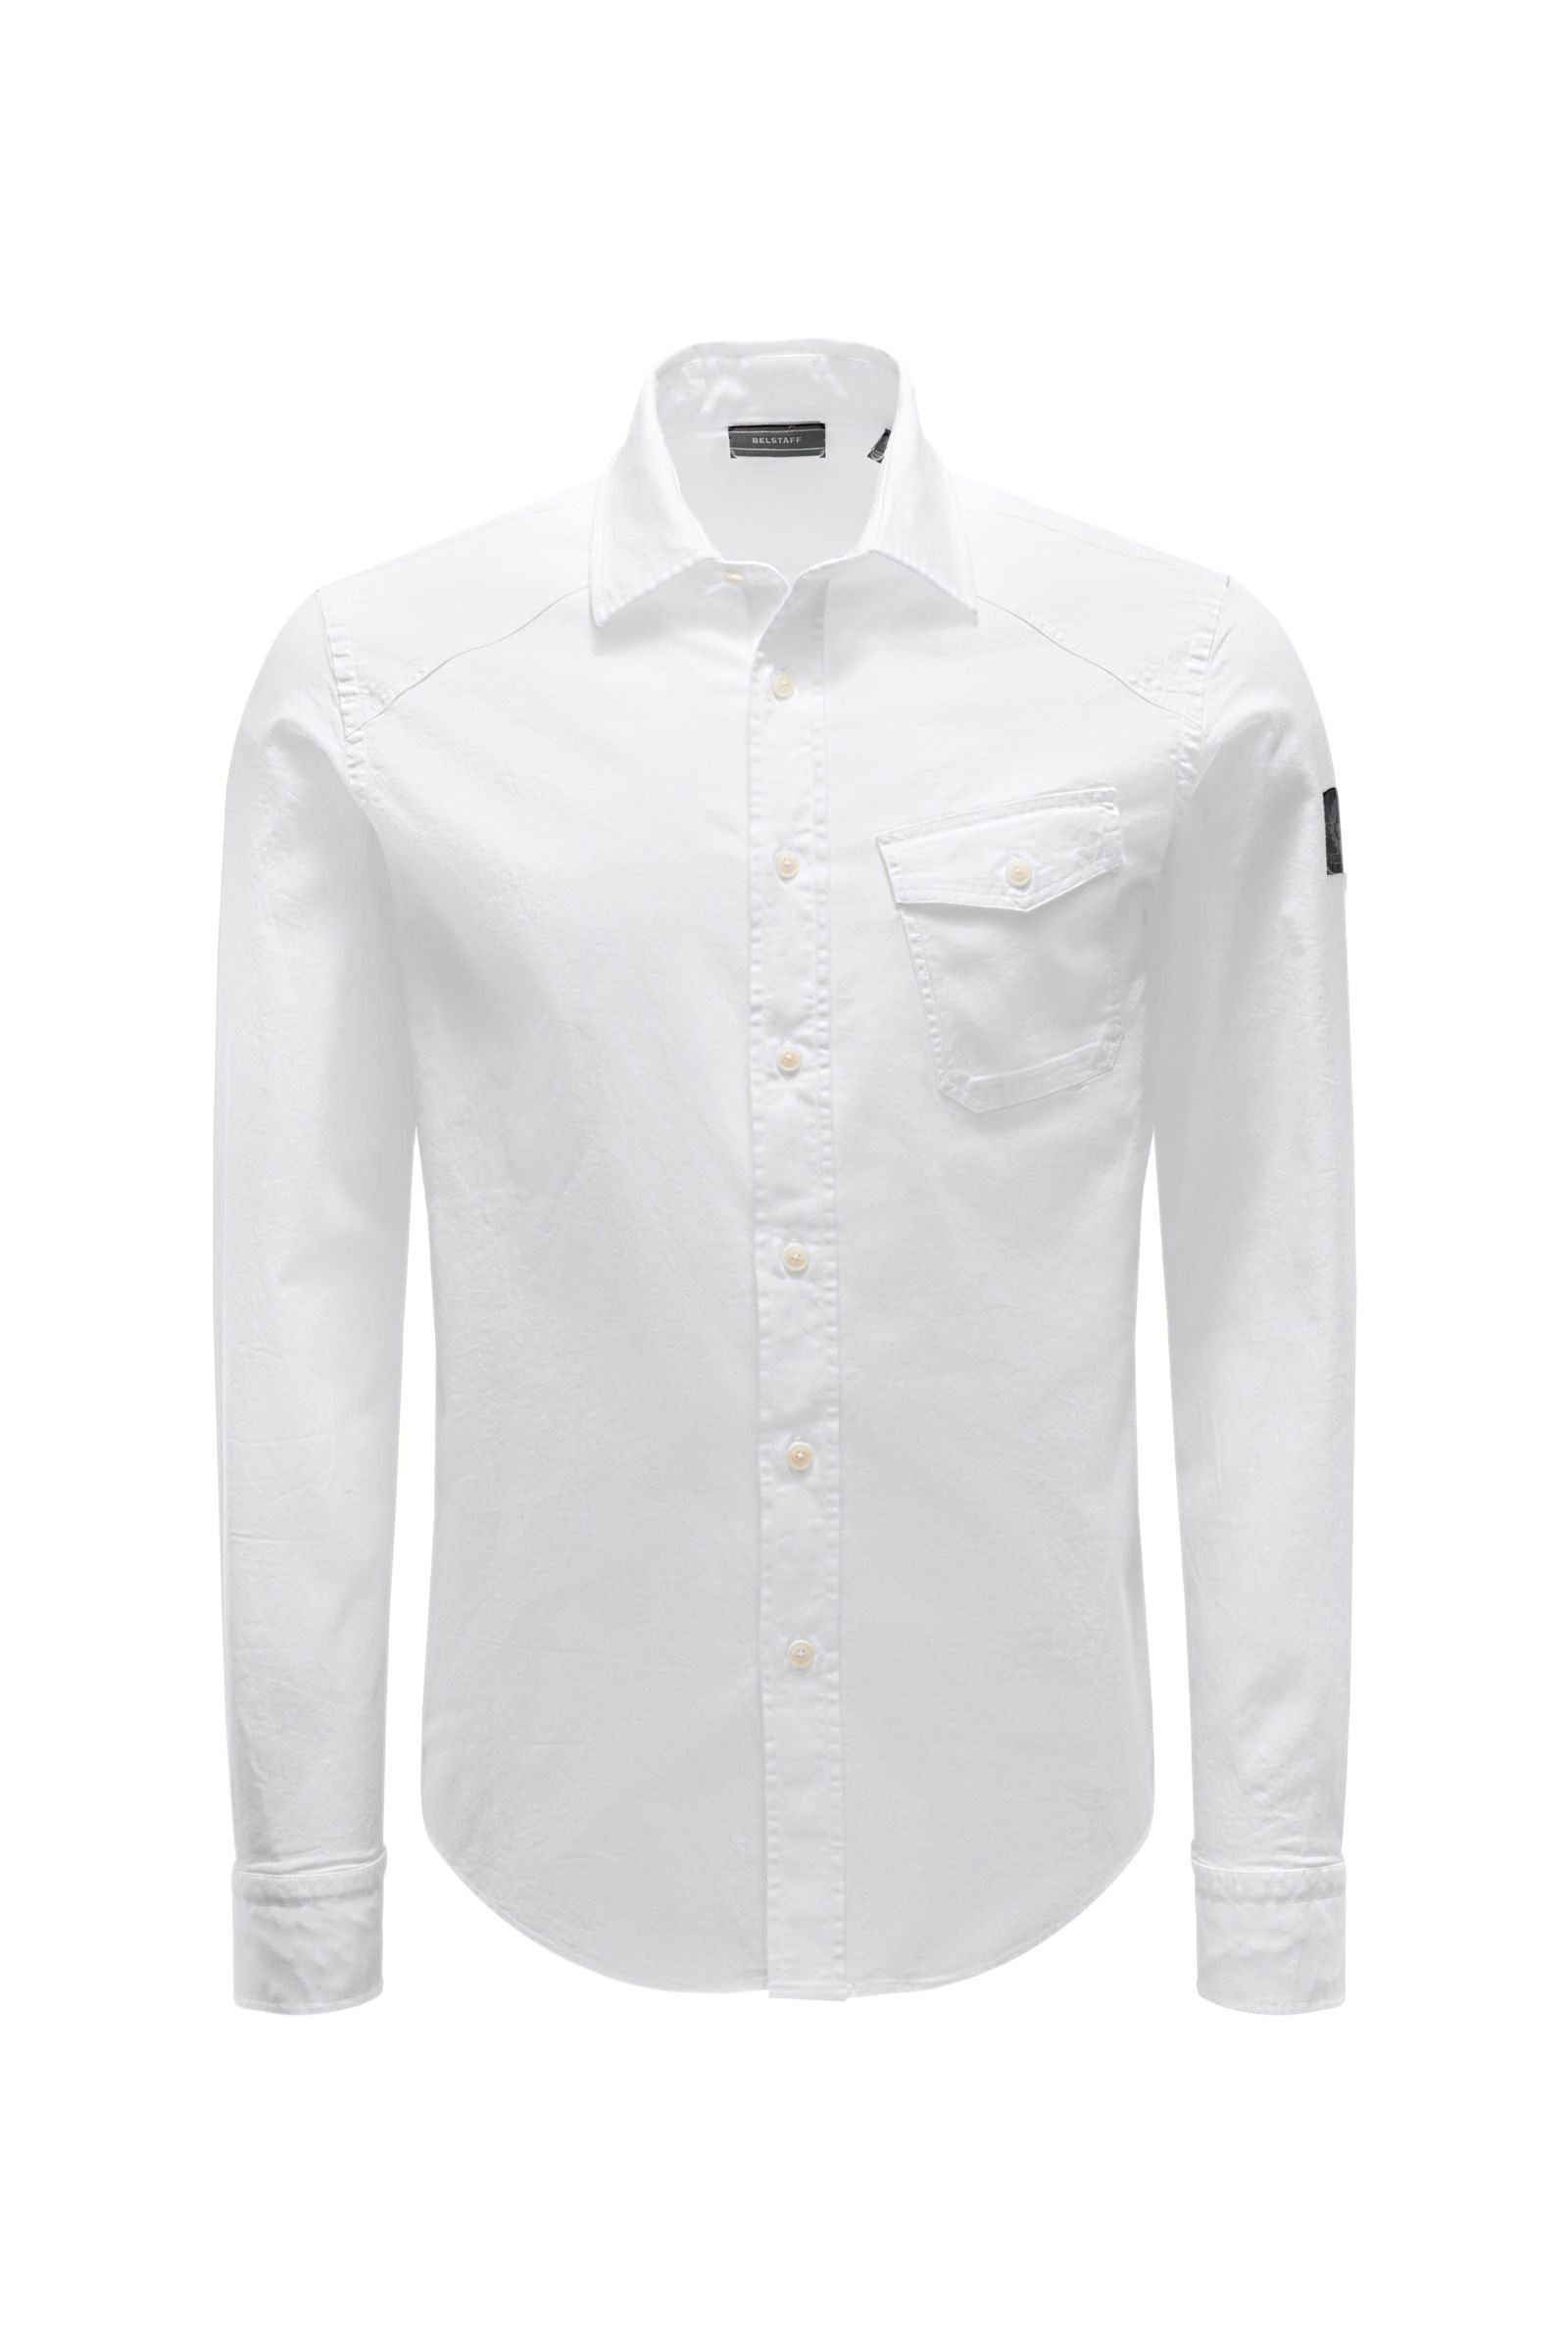 Casual shirt 'Steadway' slim collar white